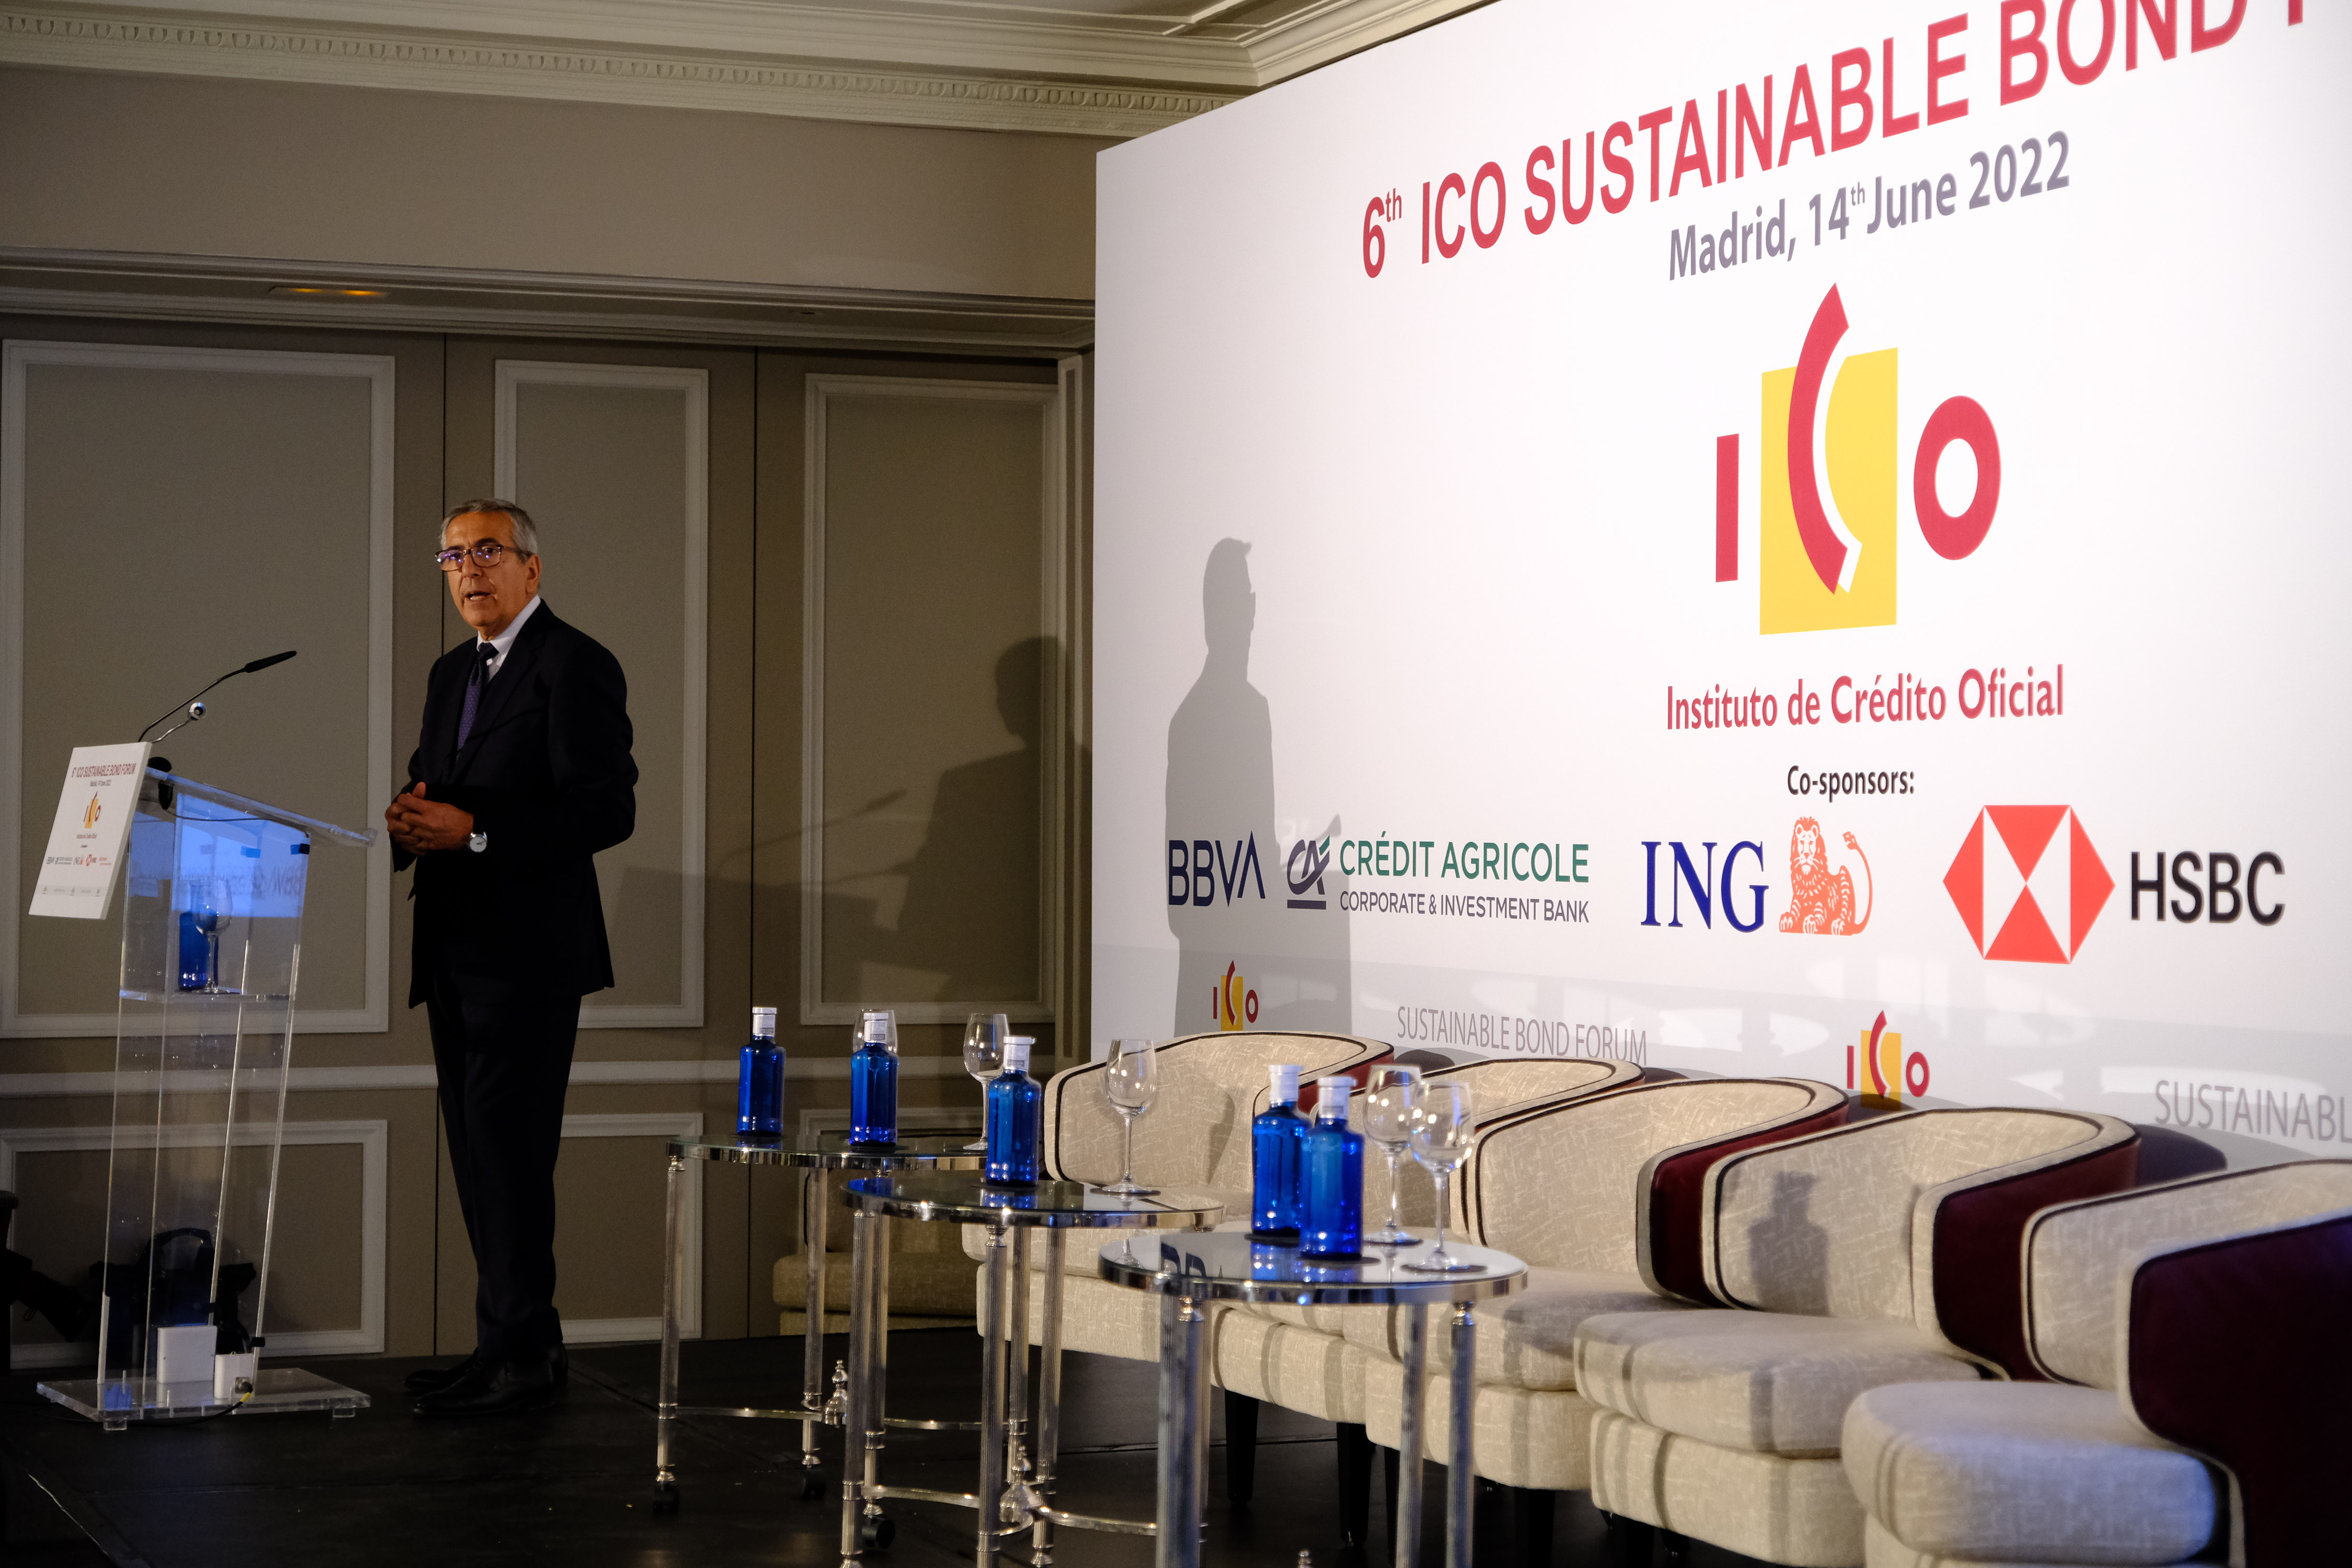 6th ICO Sustainable Bond Forum